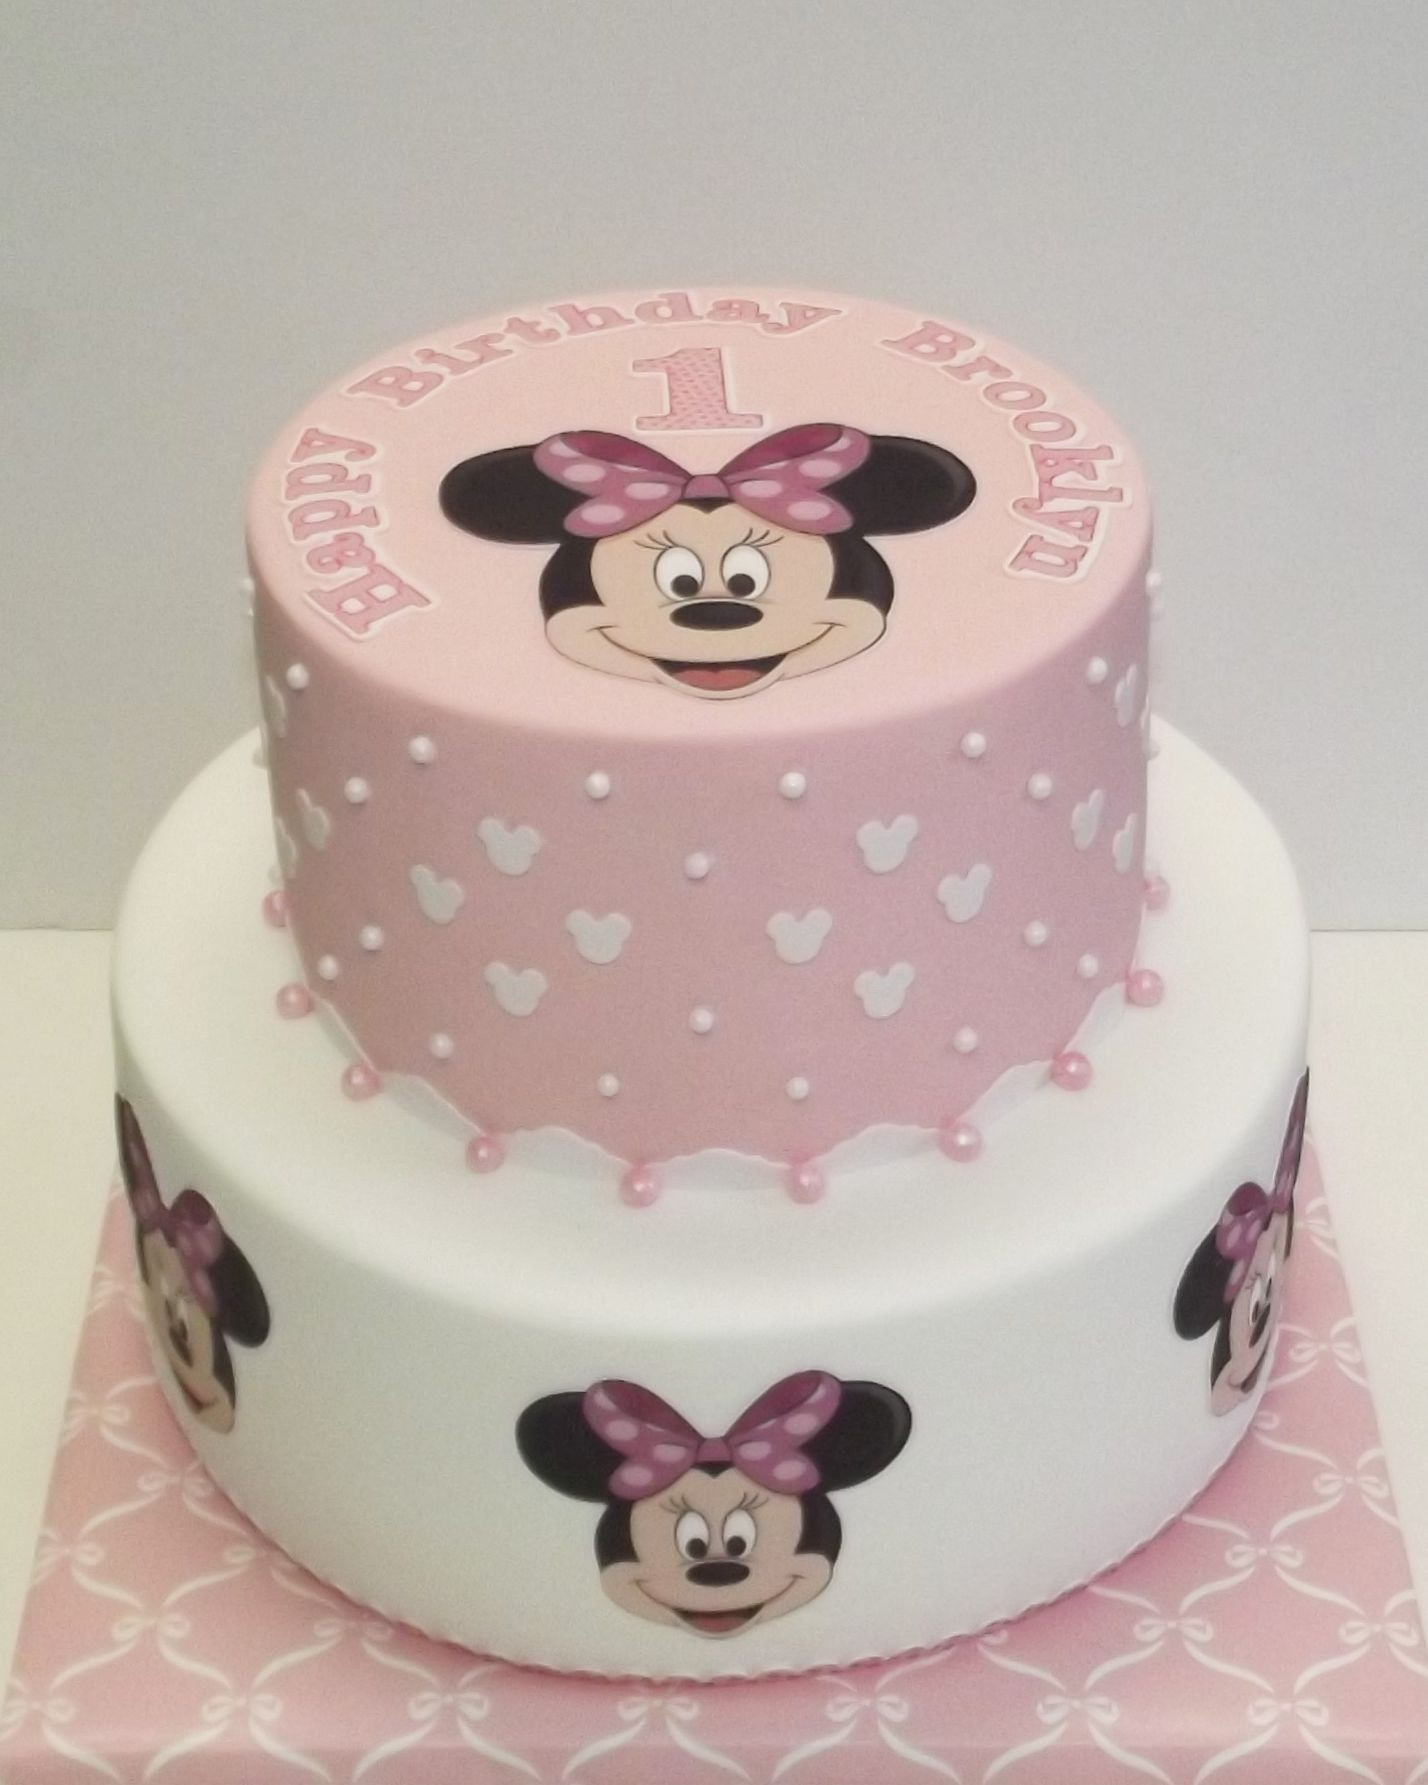 Minnie Mouse 1st Birthday Cakes
 Minnie Mouse 1st Birthday Cake Cake licious